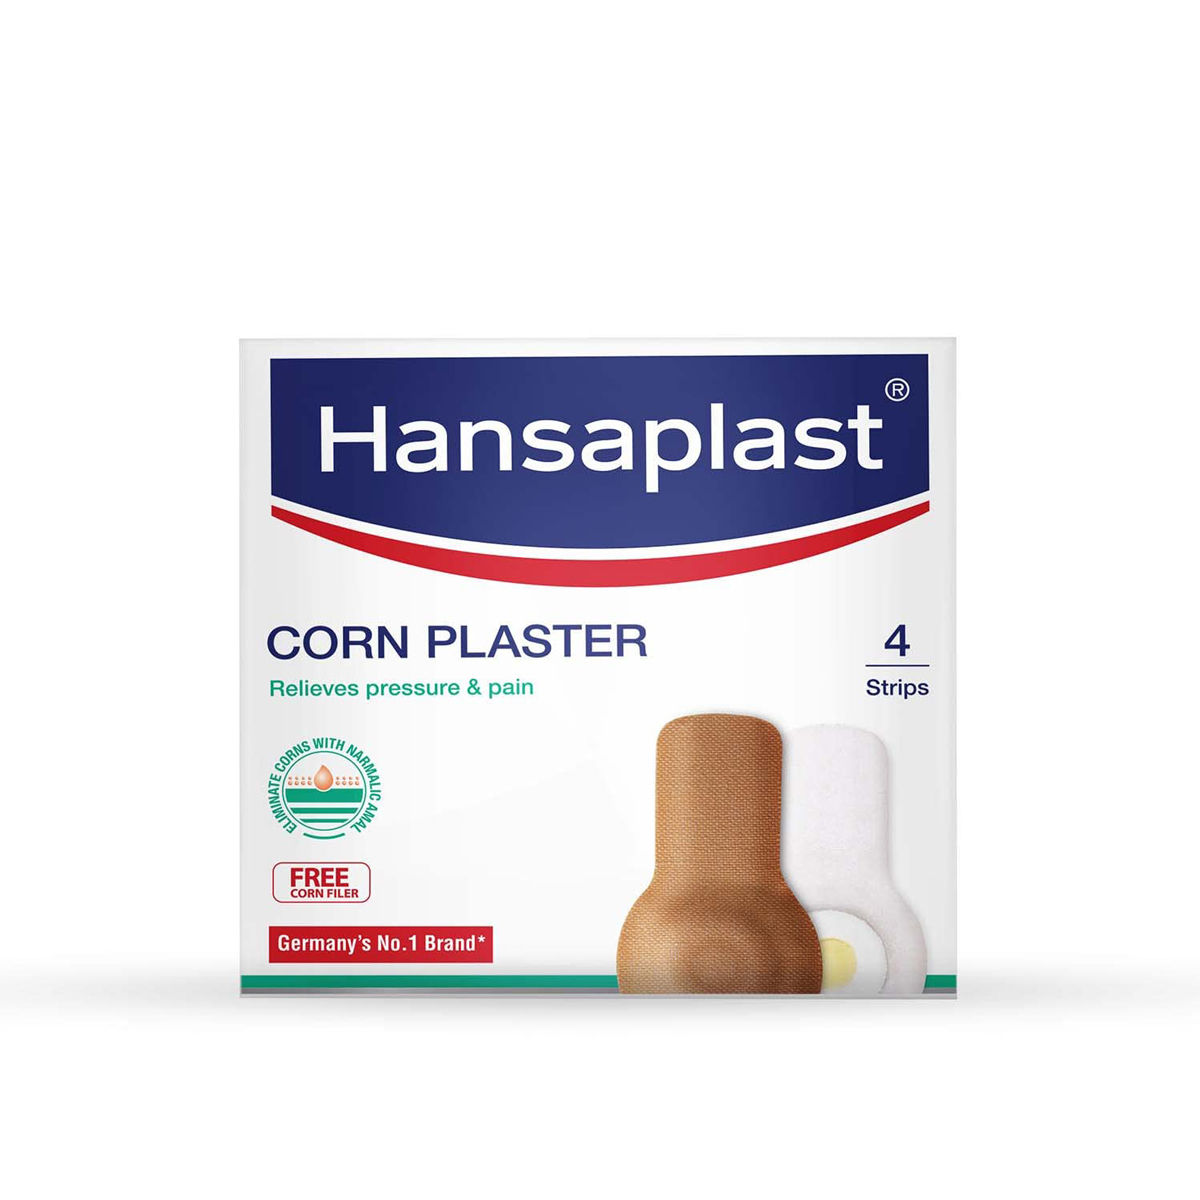 Hansaplast Corn Plaster Strips, 4 Count, Pack of 1 